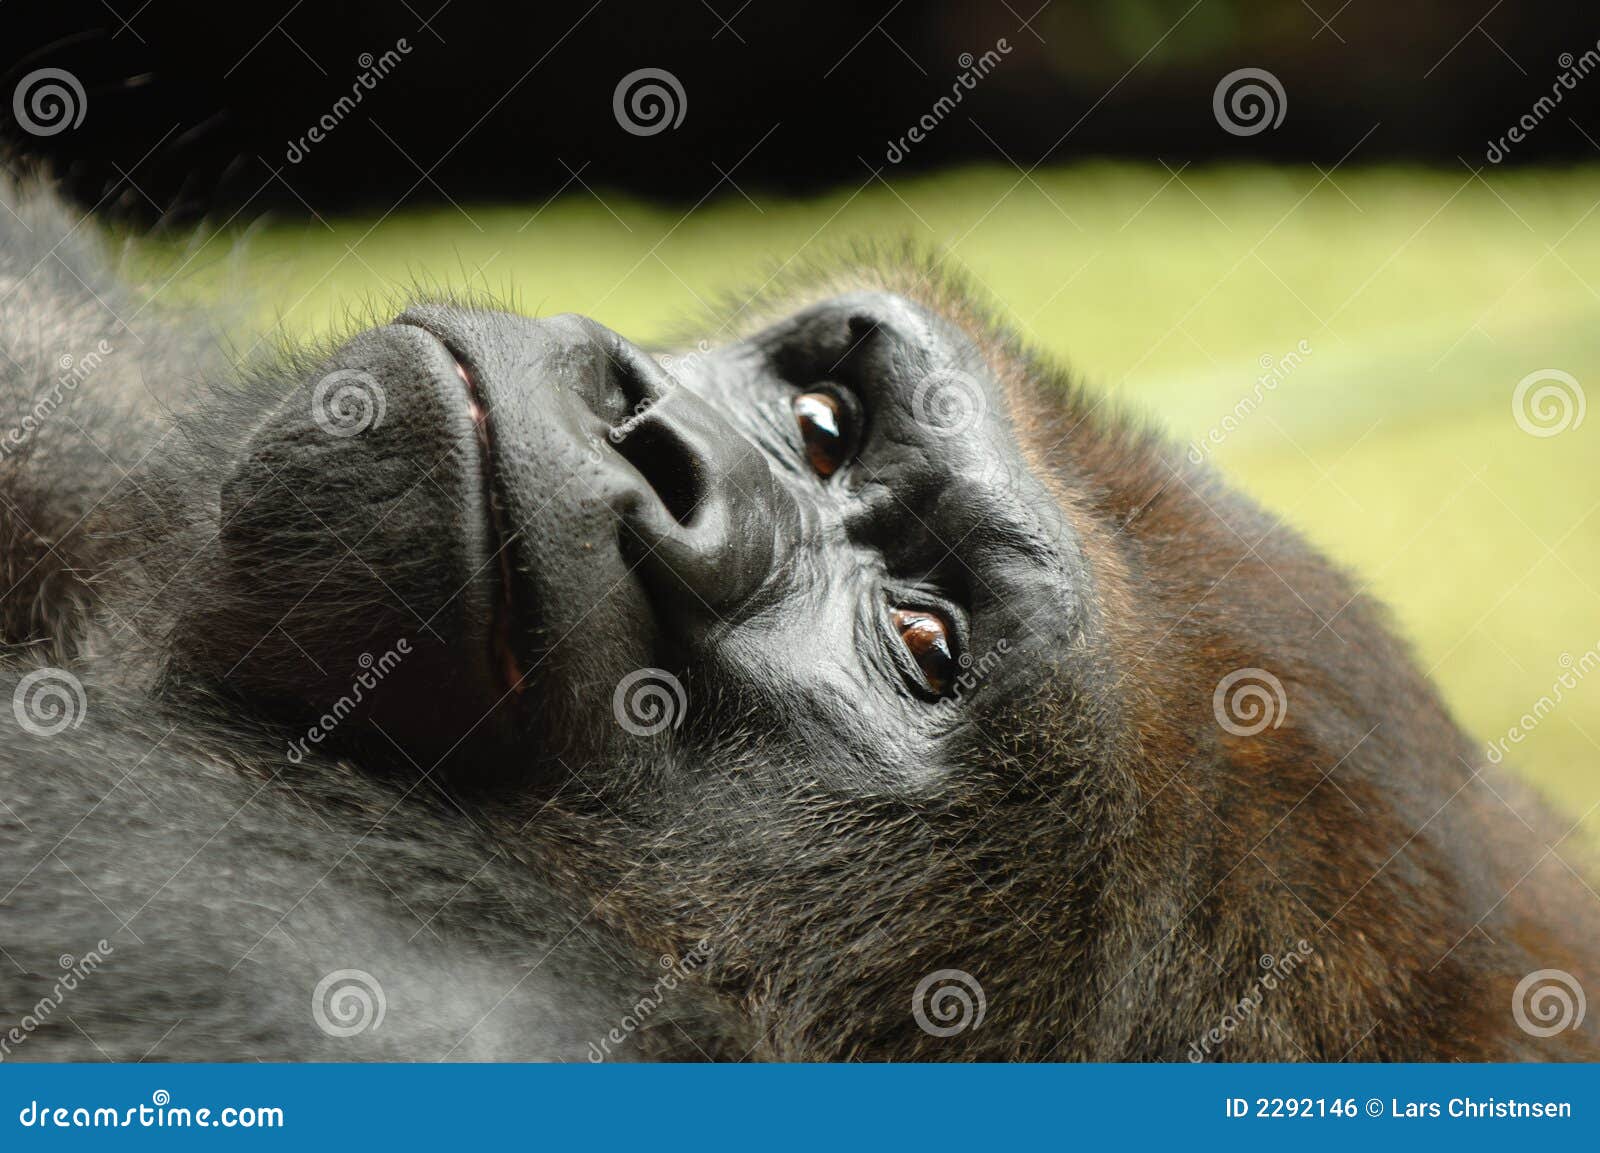 resting ape